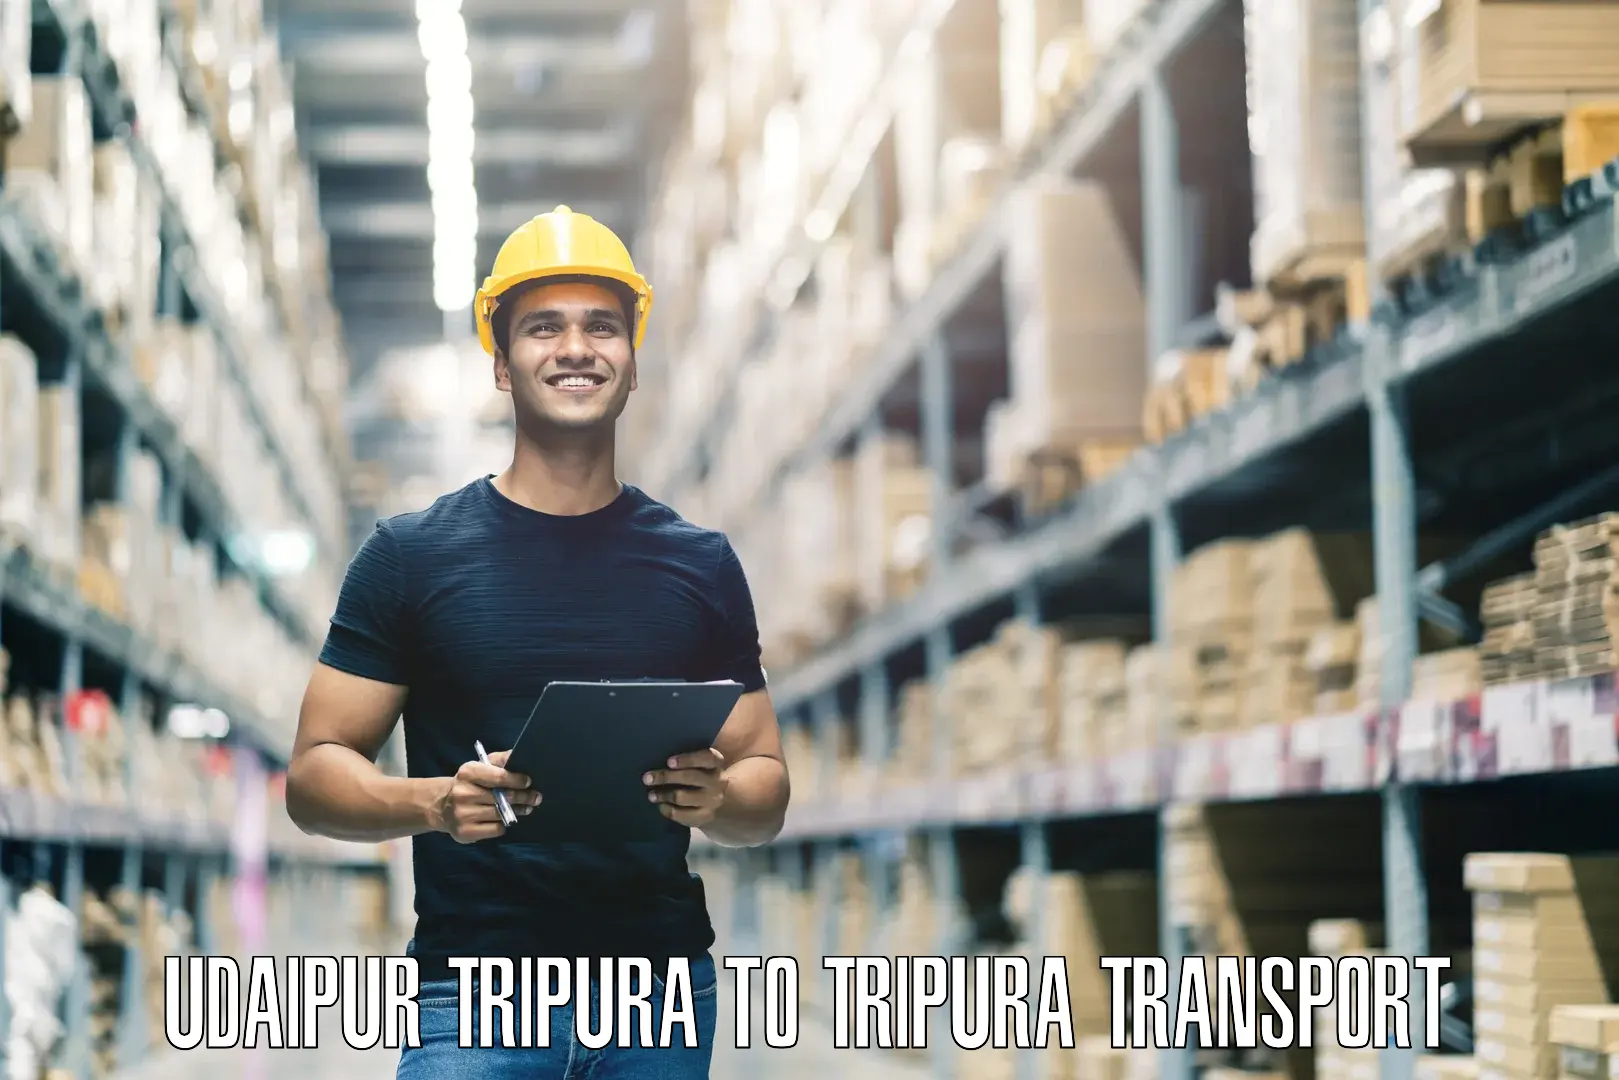 Shipping partner Udaipur Tripura to West Tripura